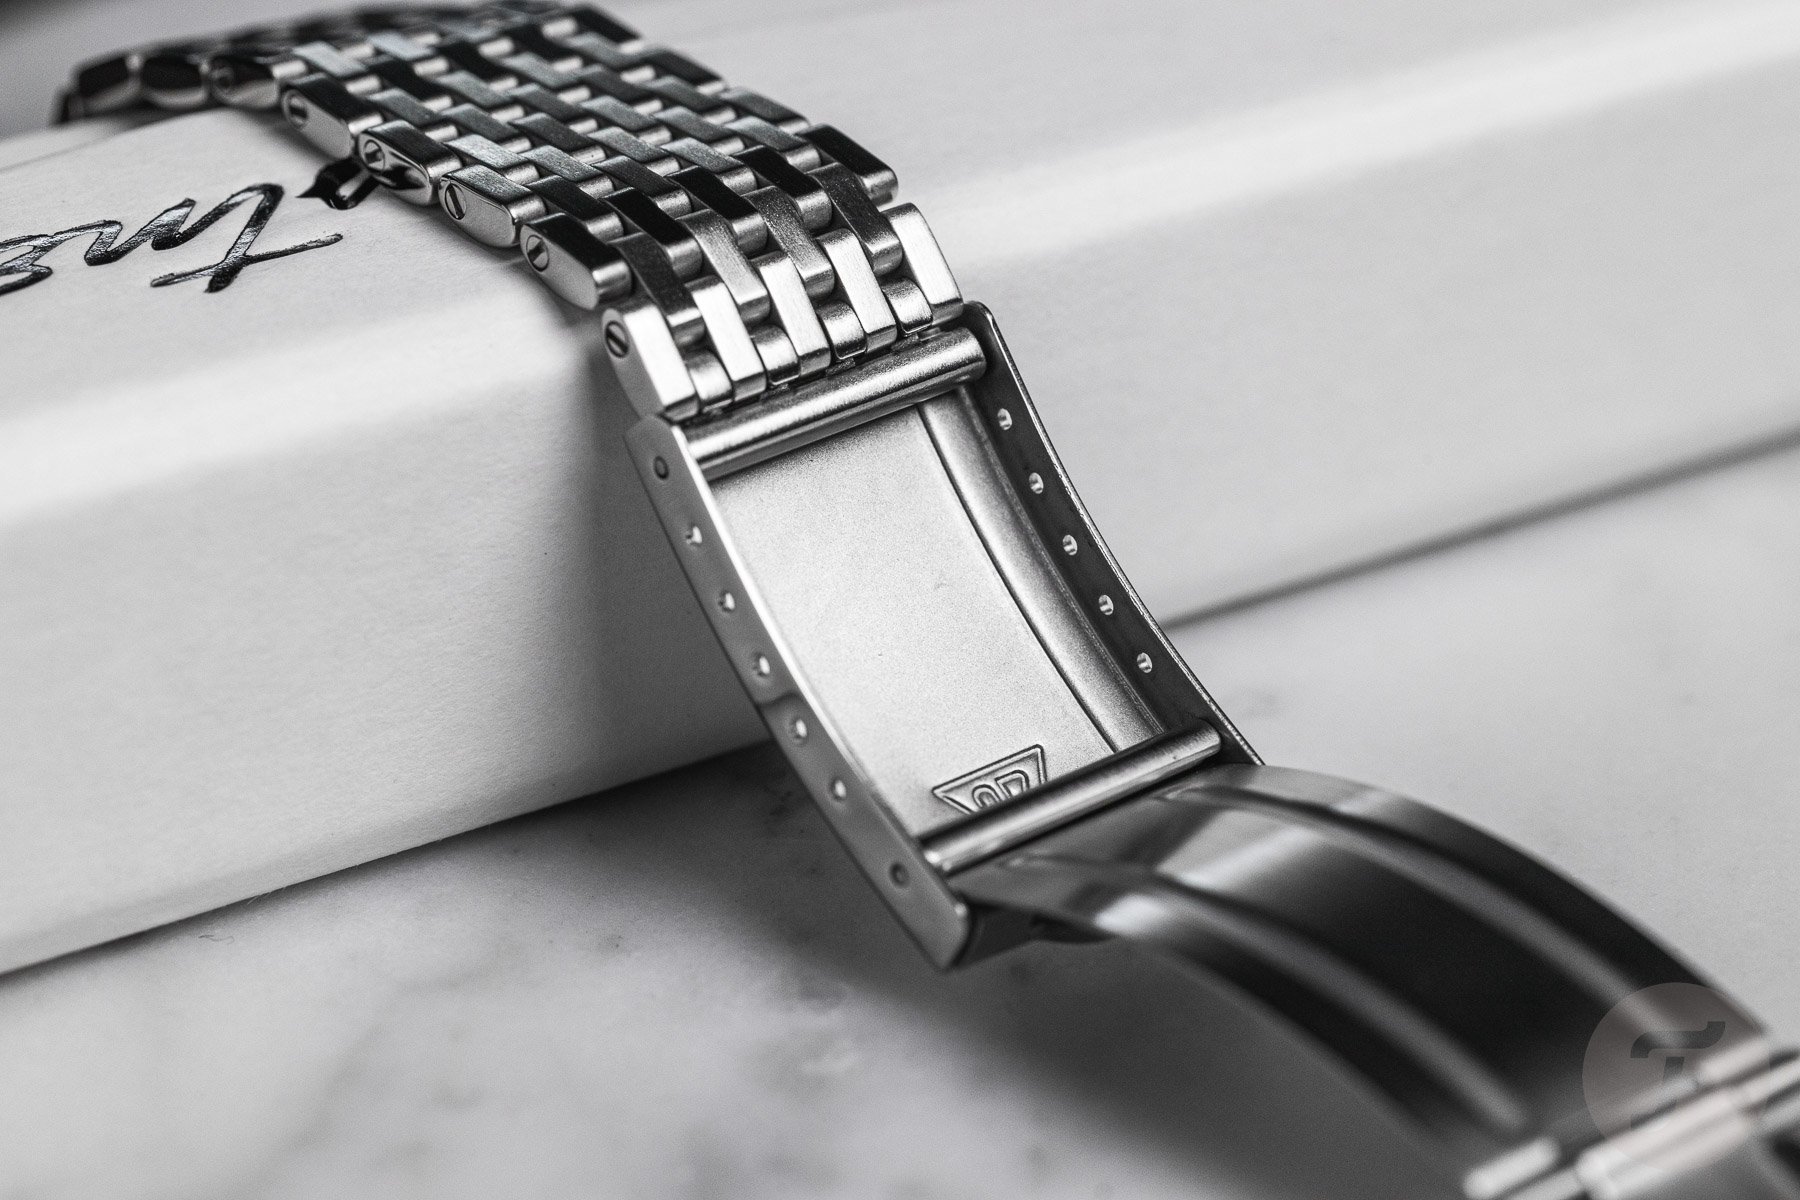 Forstner 7-Row Beads of Rice Stainless Steel Watch Bracelet